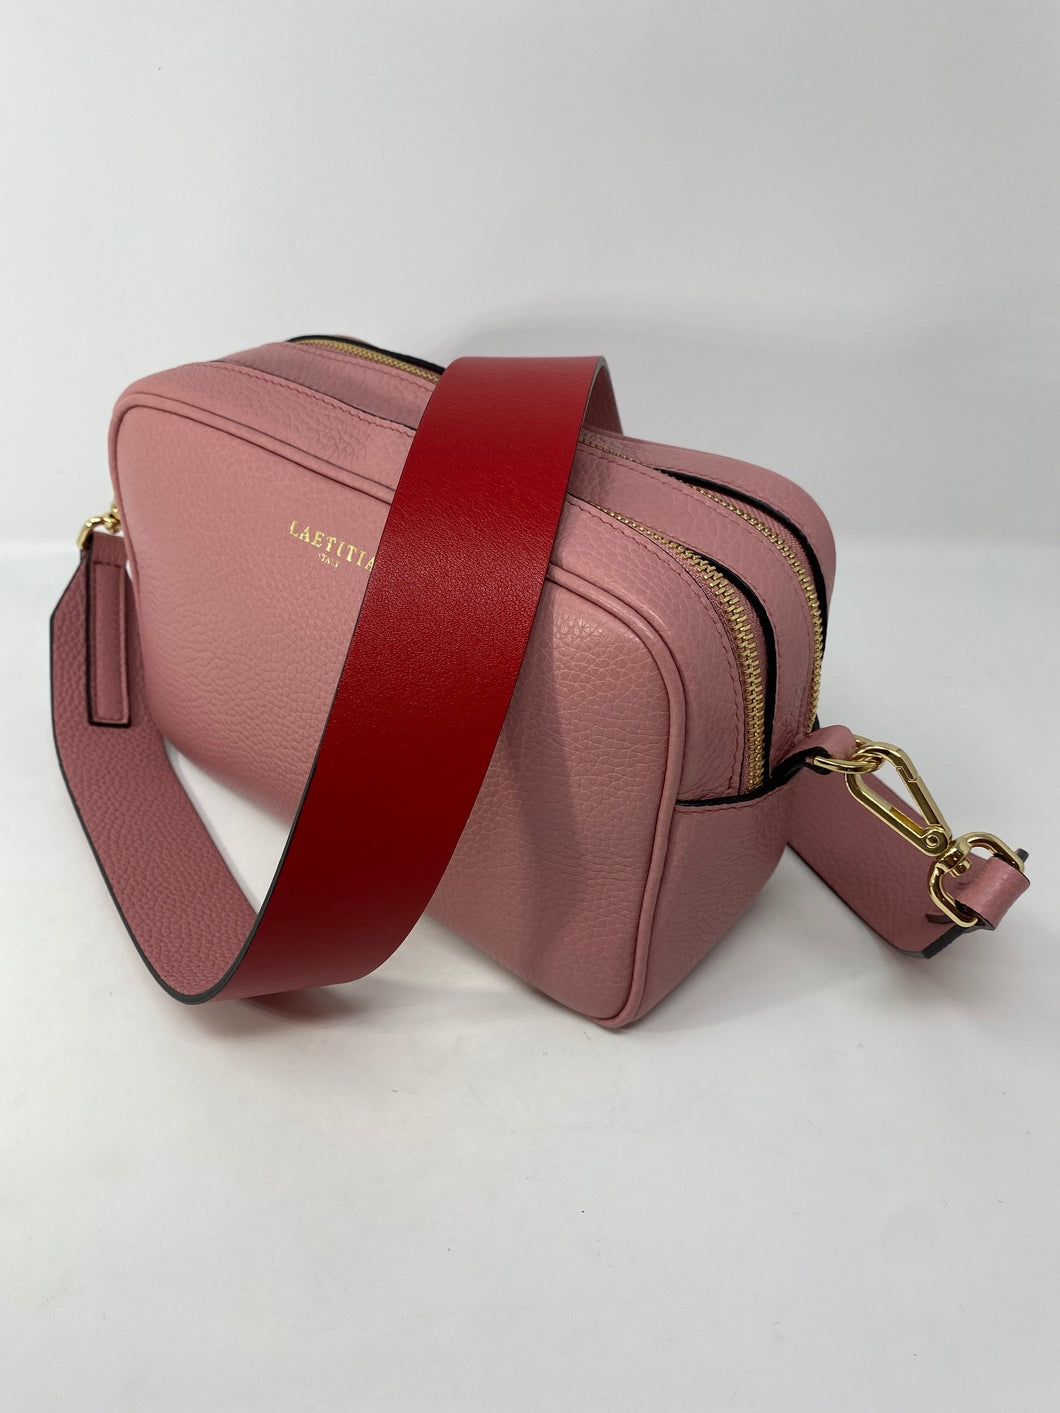 Camera Pink & Red Bag by Laetitia